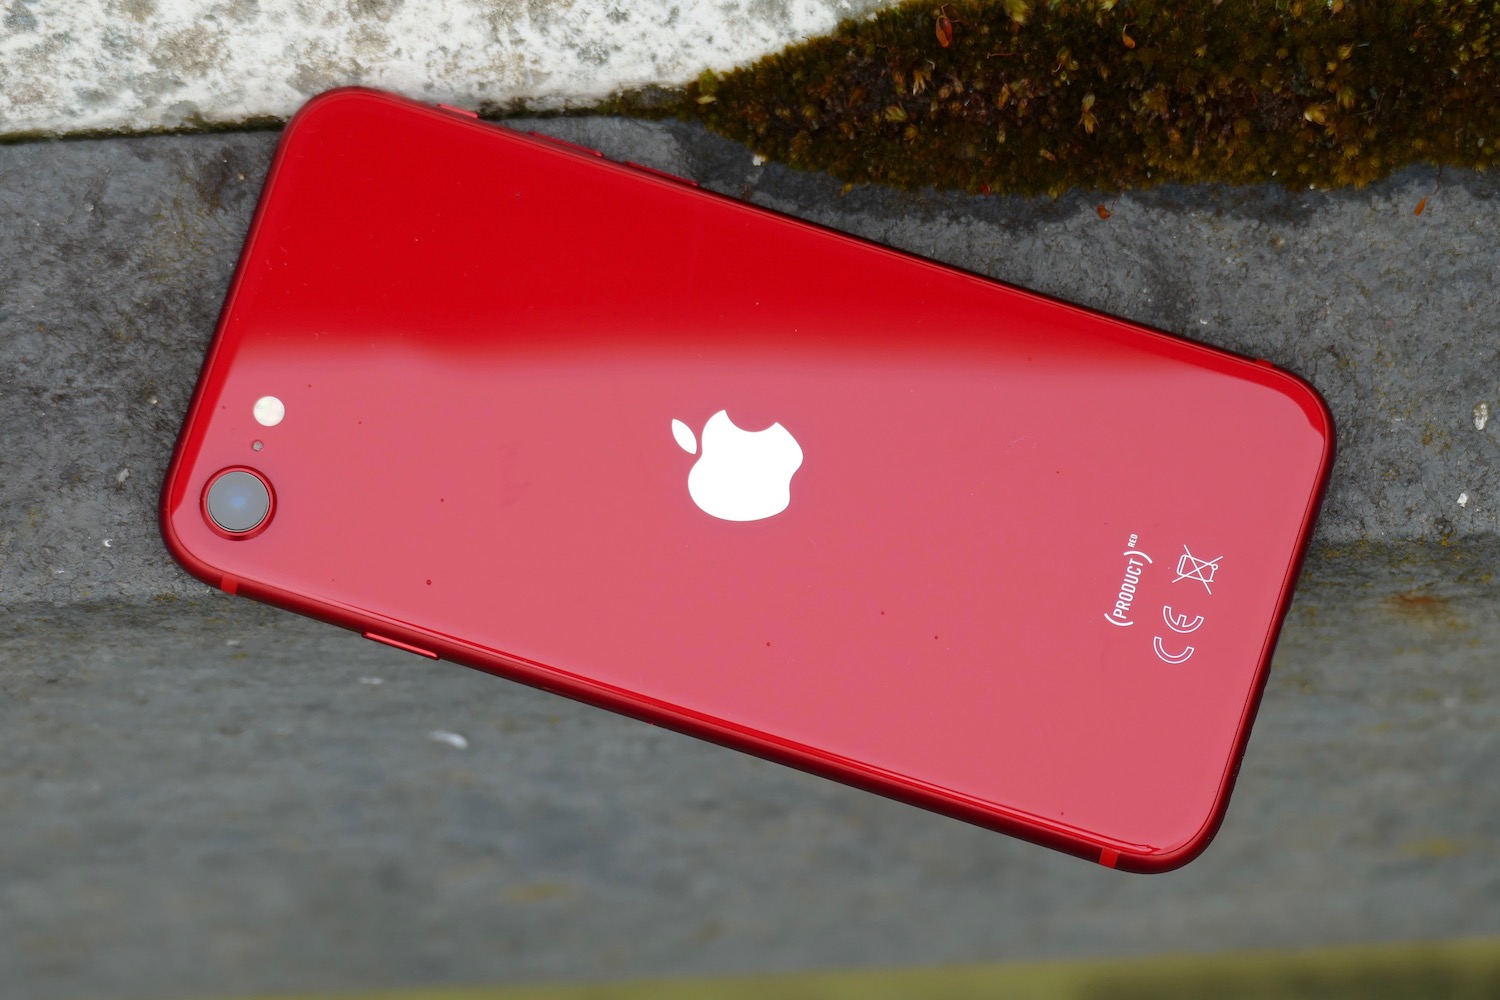 doe alstublieft niet Danser catalogus iPhone SE (2020) Review: Apple's Cheap iPhone Is Still Great | Digital  Trends